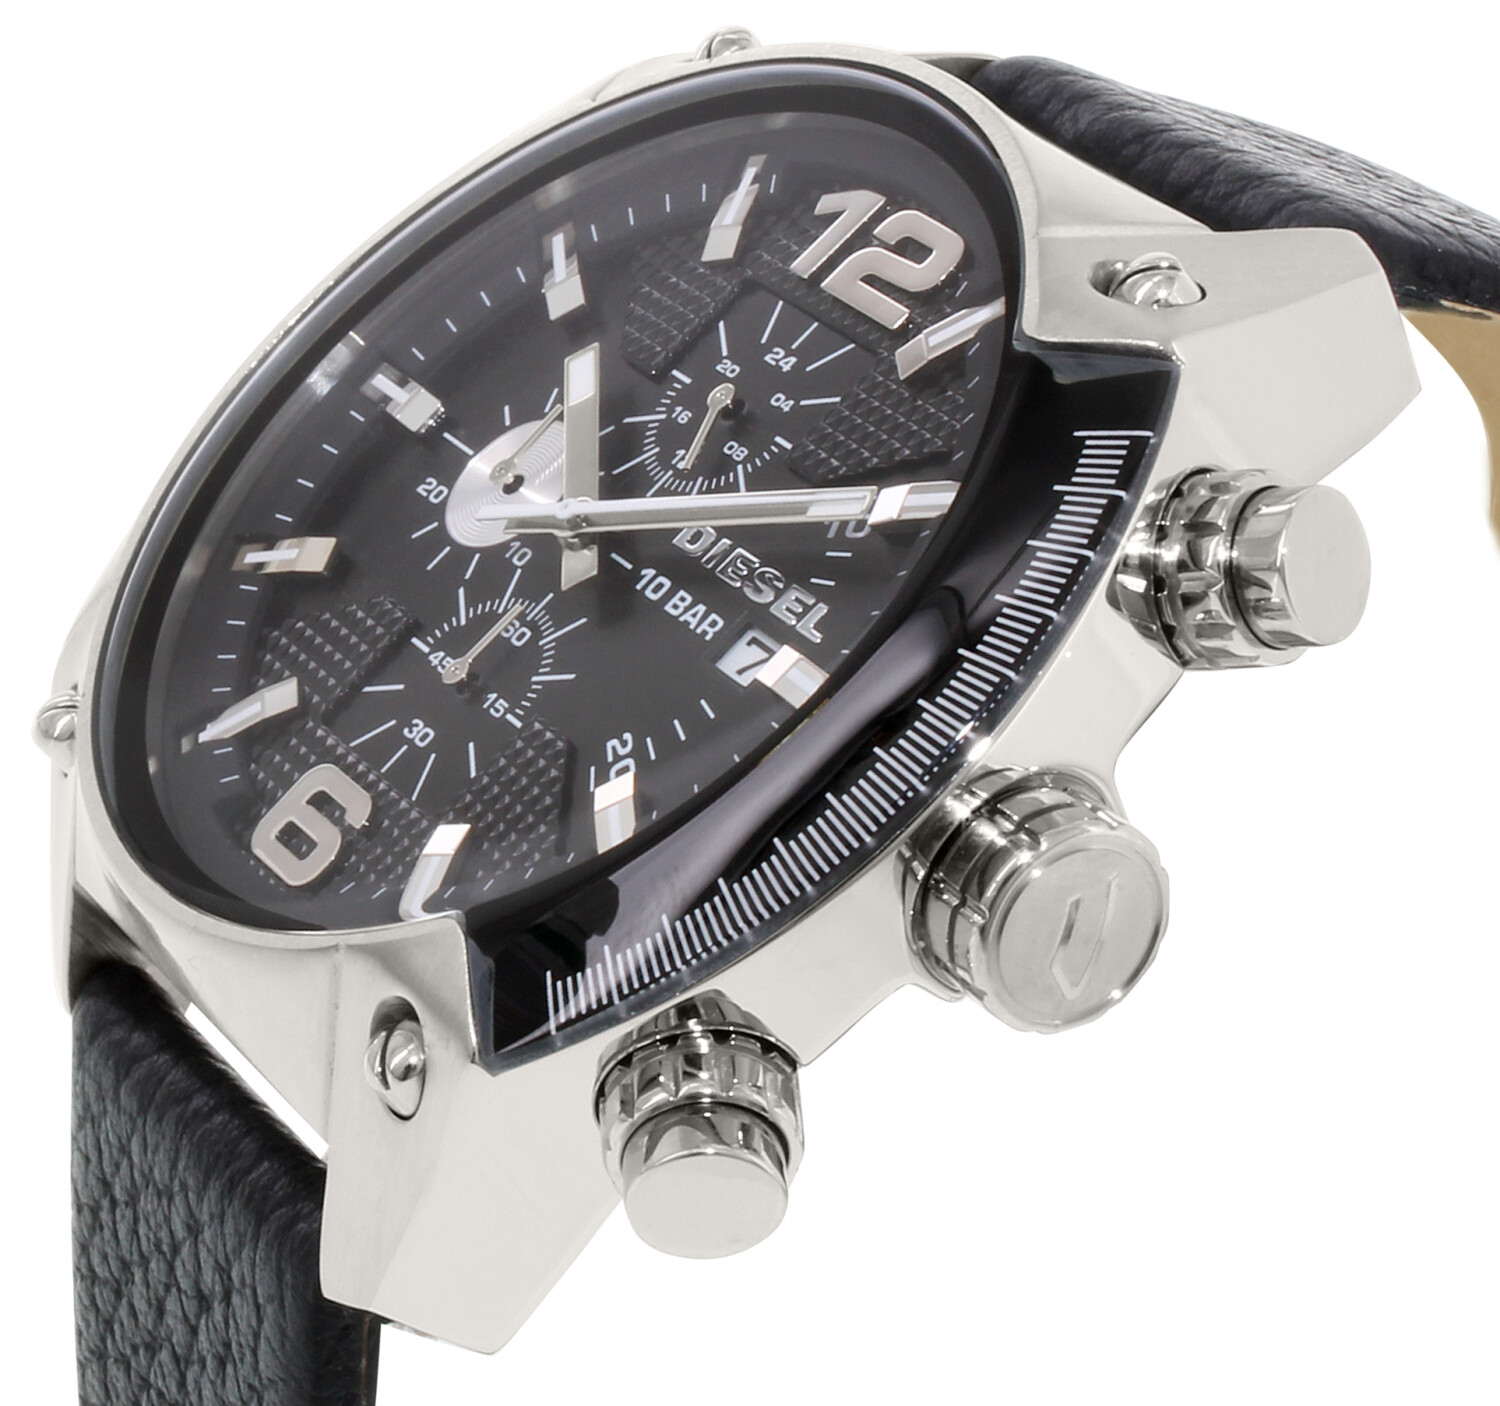 Diesel Men's Overflow Black Dial Watch - DZ4341 - image 2 of 3